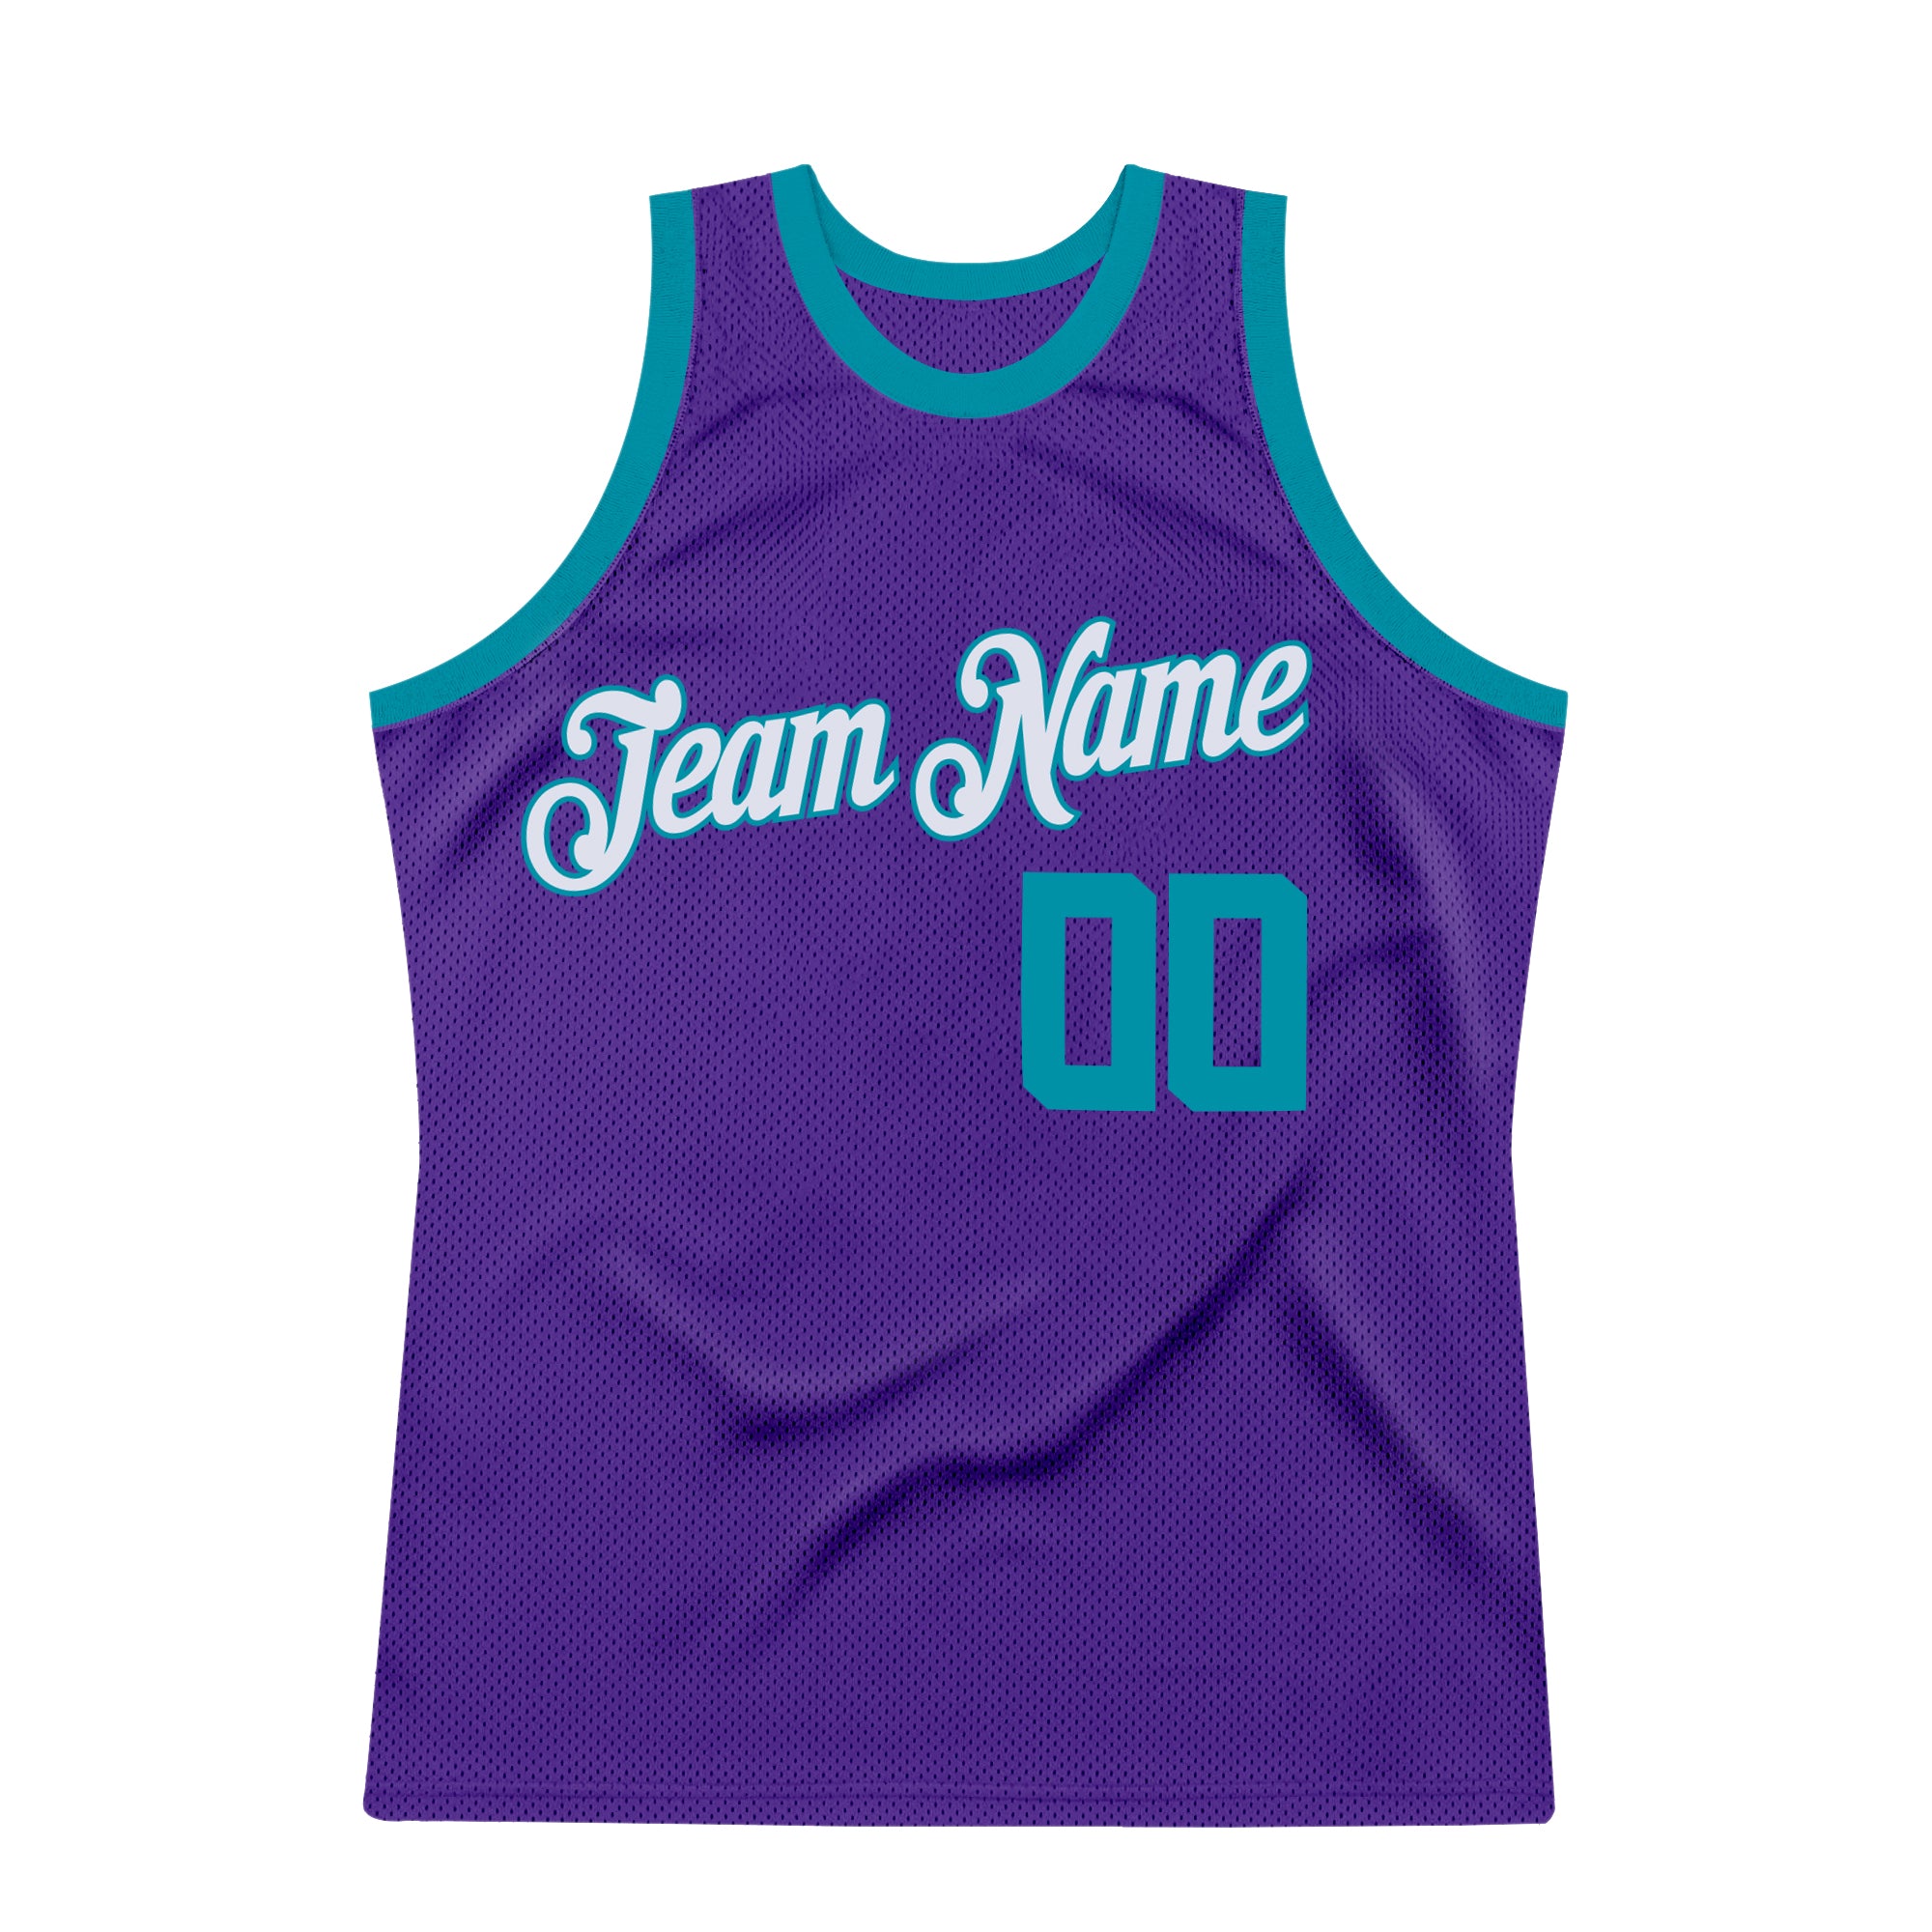 Custom Team Basketball Purple Jersey White